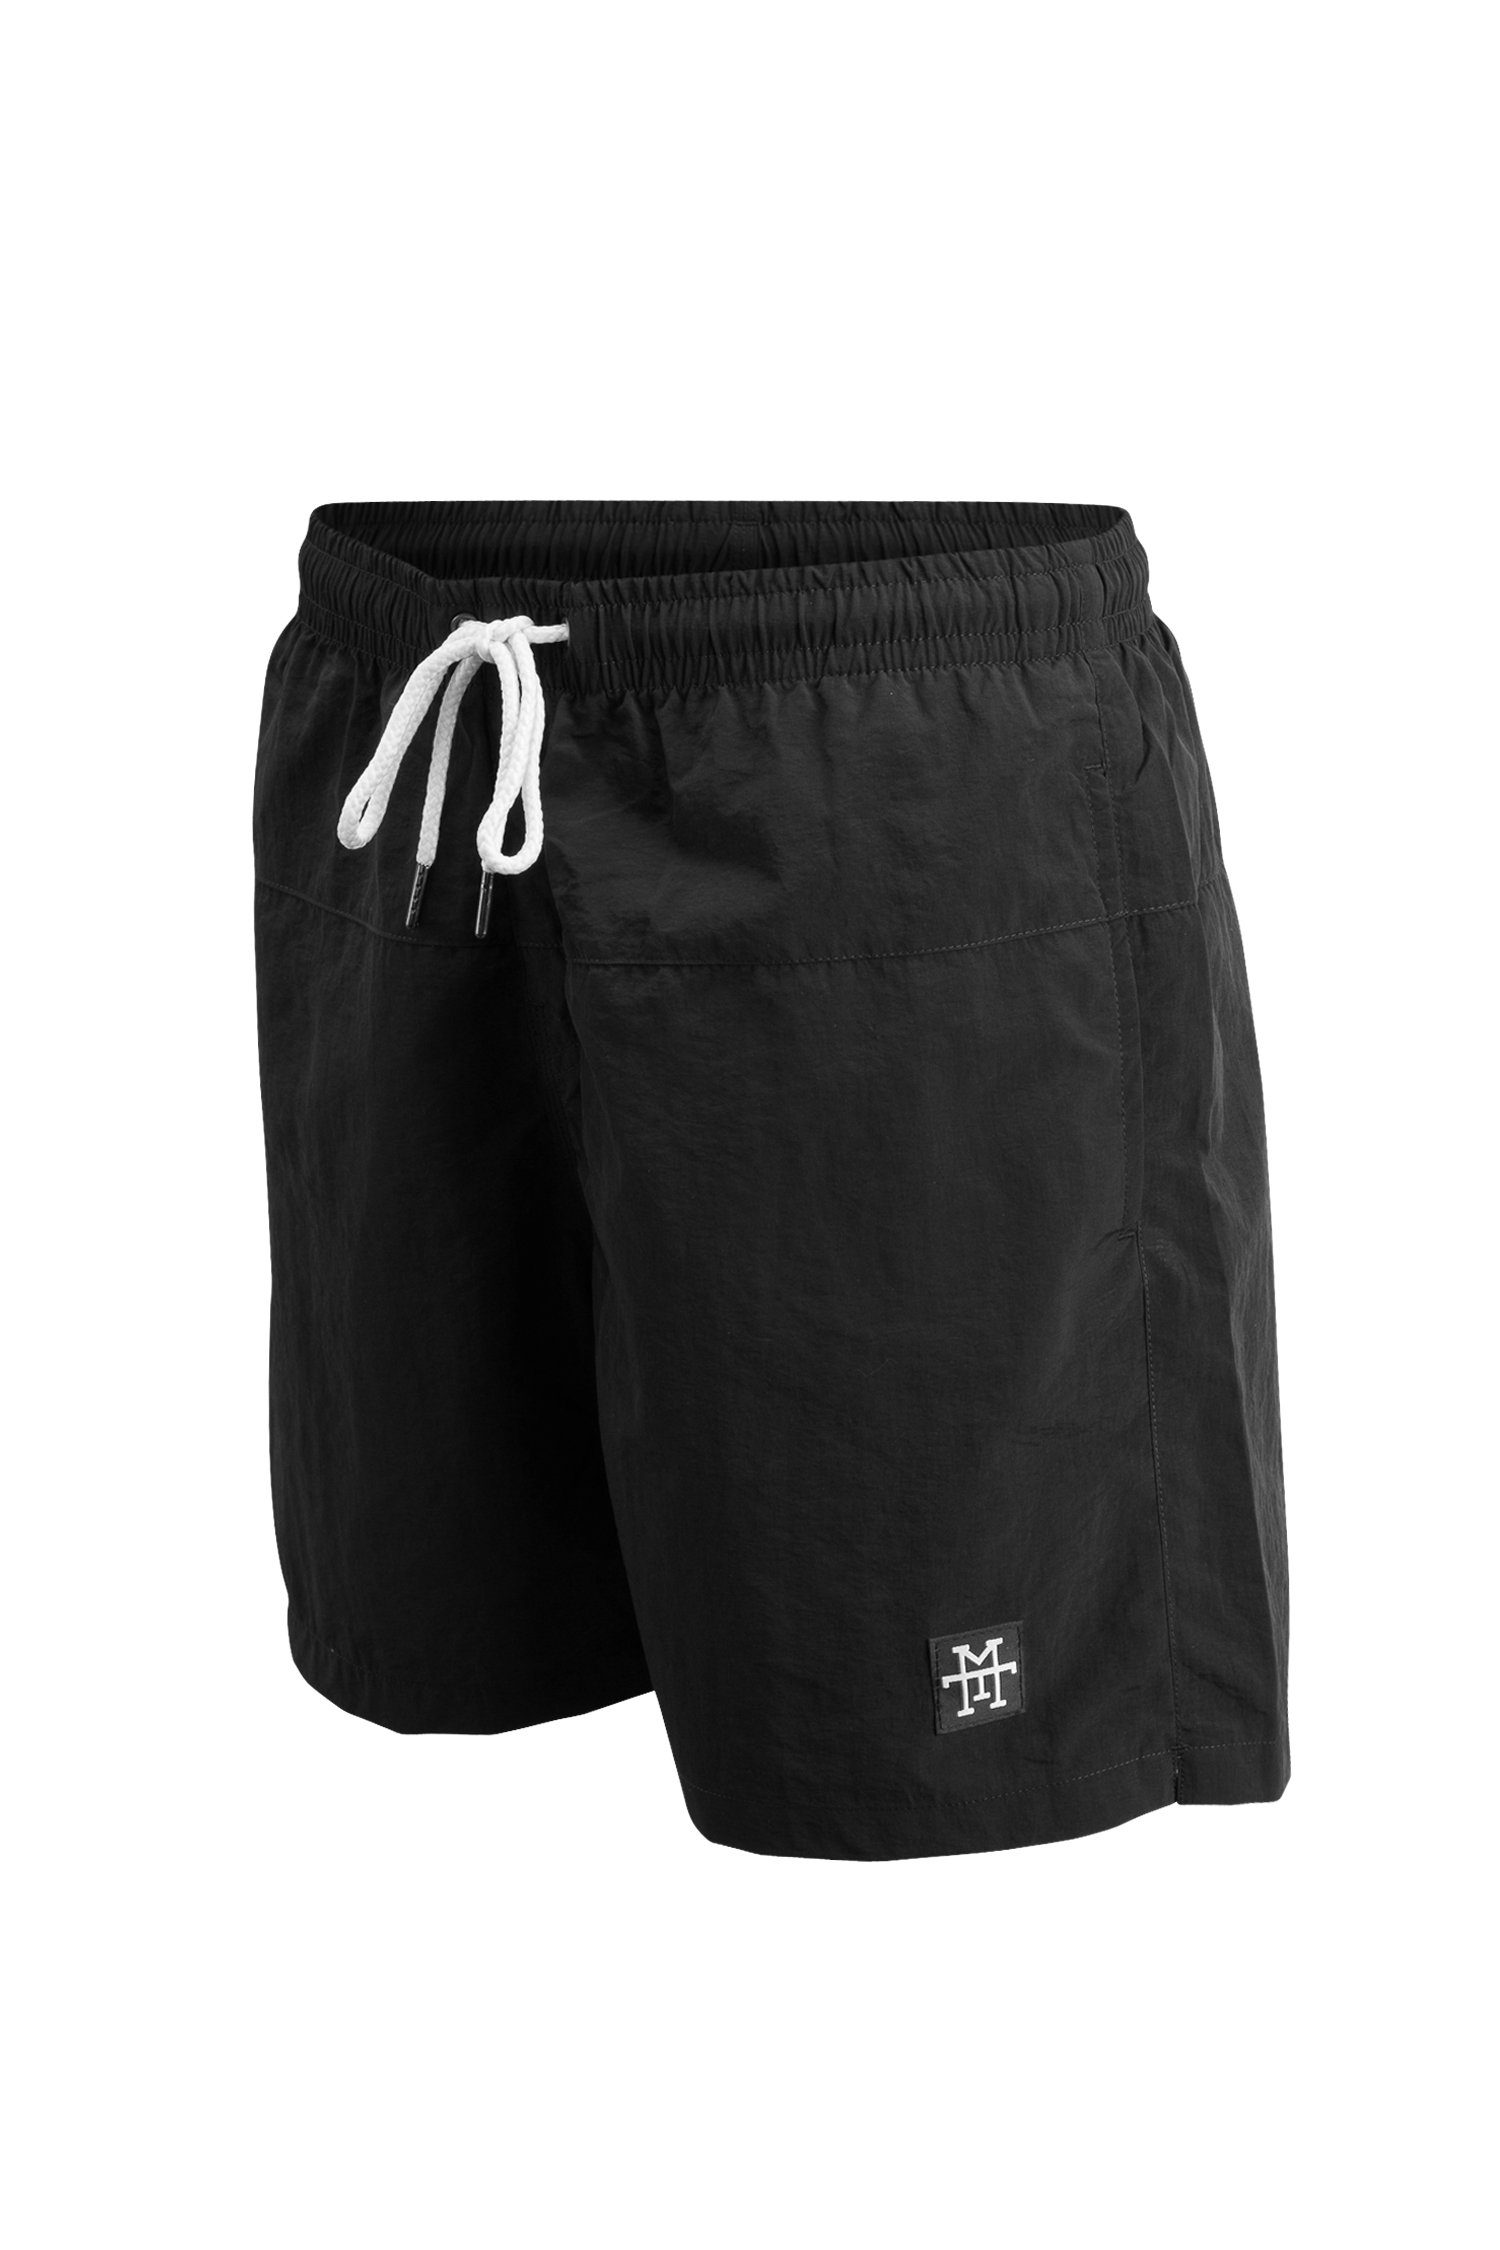 Badehosen Out Swim schnelltrocknend - Manufaktur13 Black Shorts Badeshorts